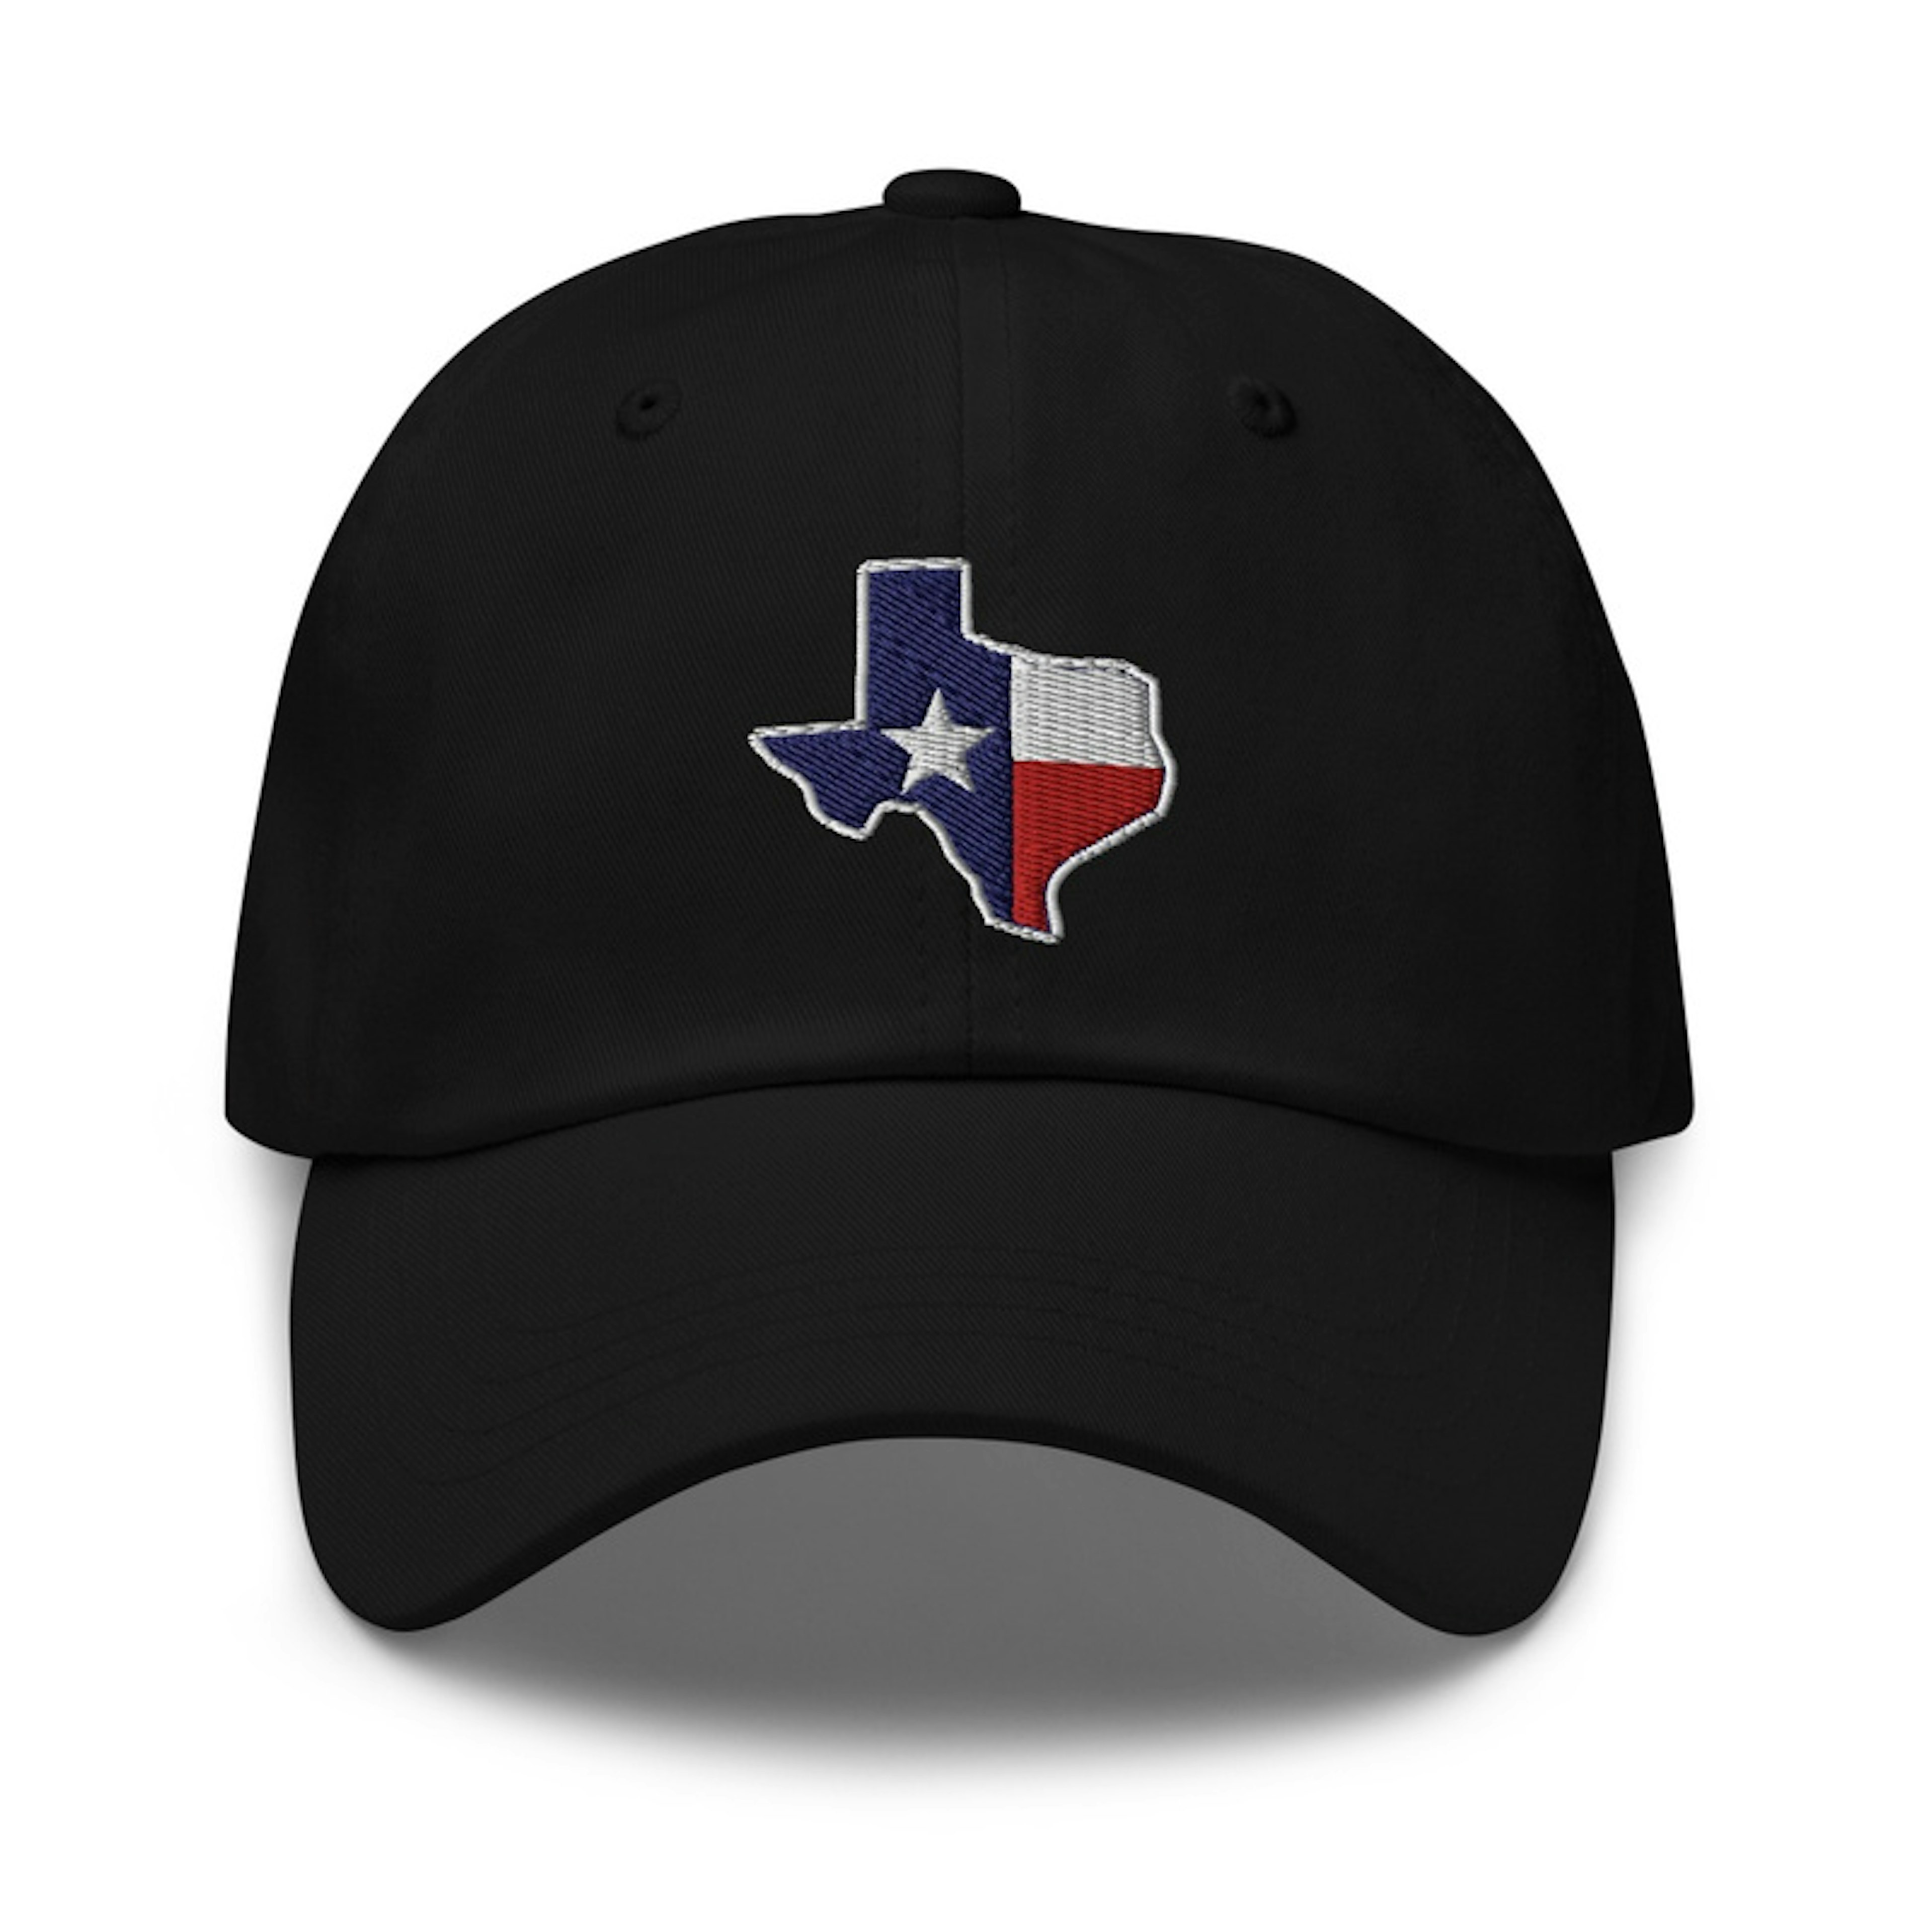 Contraband Texas - Dad Cap